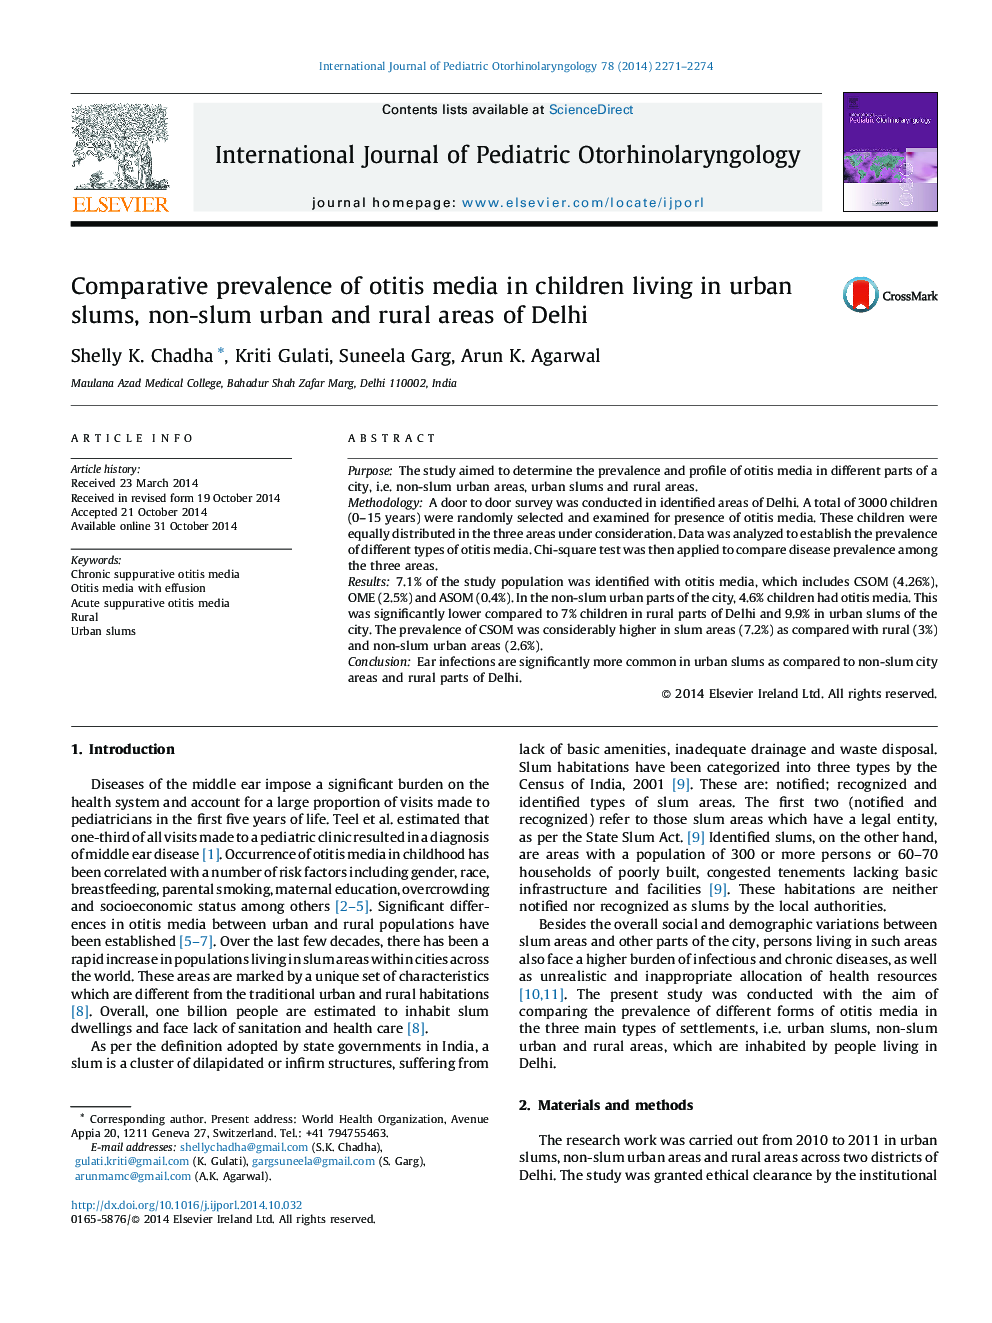 Comparative prevalence of otitis media in children living in urban slums, non-slum urban and rural areas of Delhi